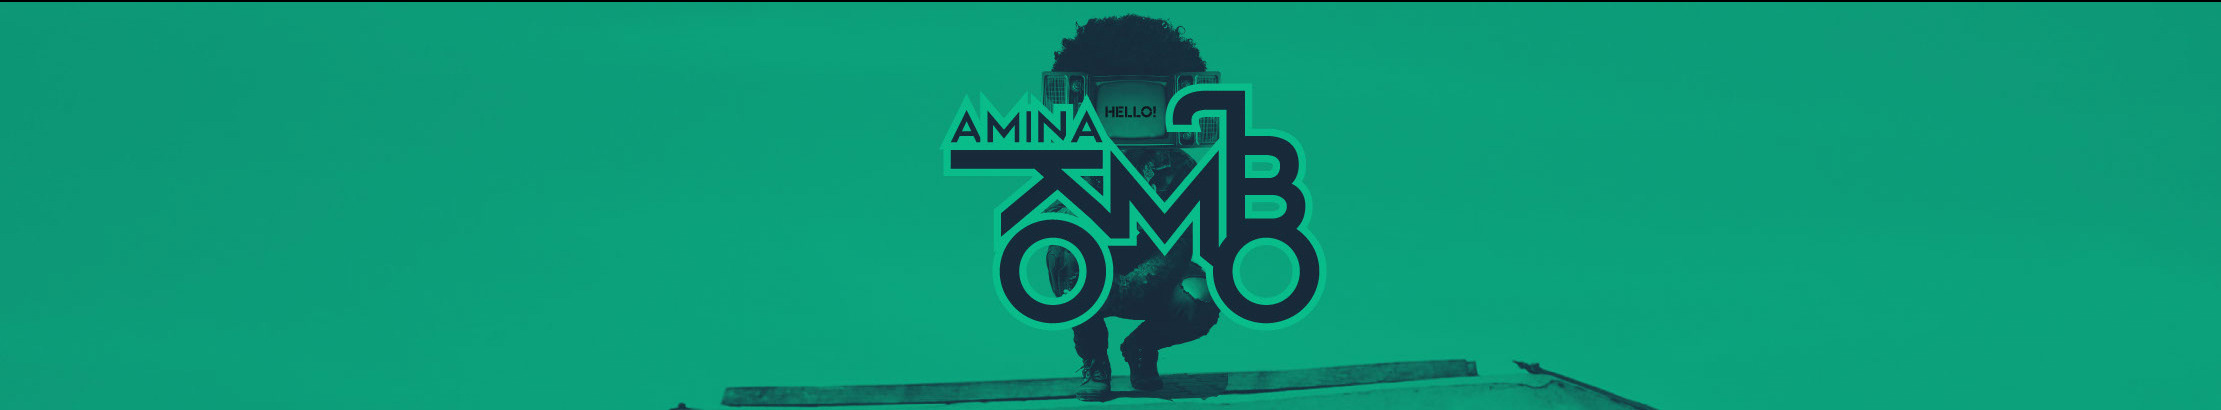 Banner profilu uživatele Amina Kombo